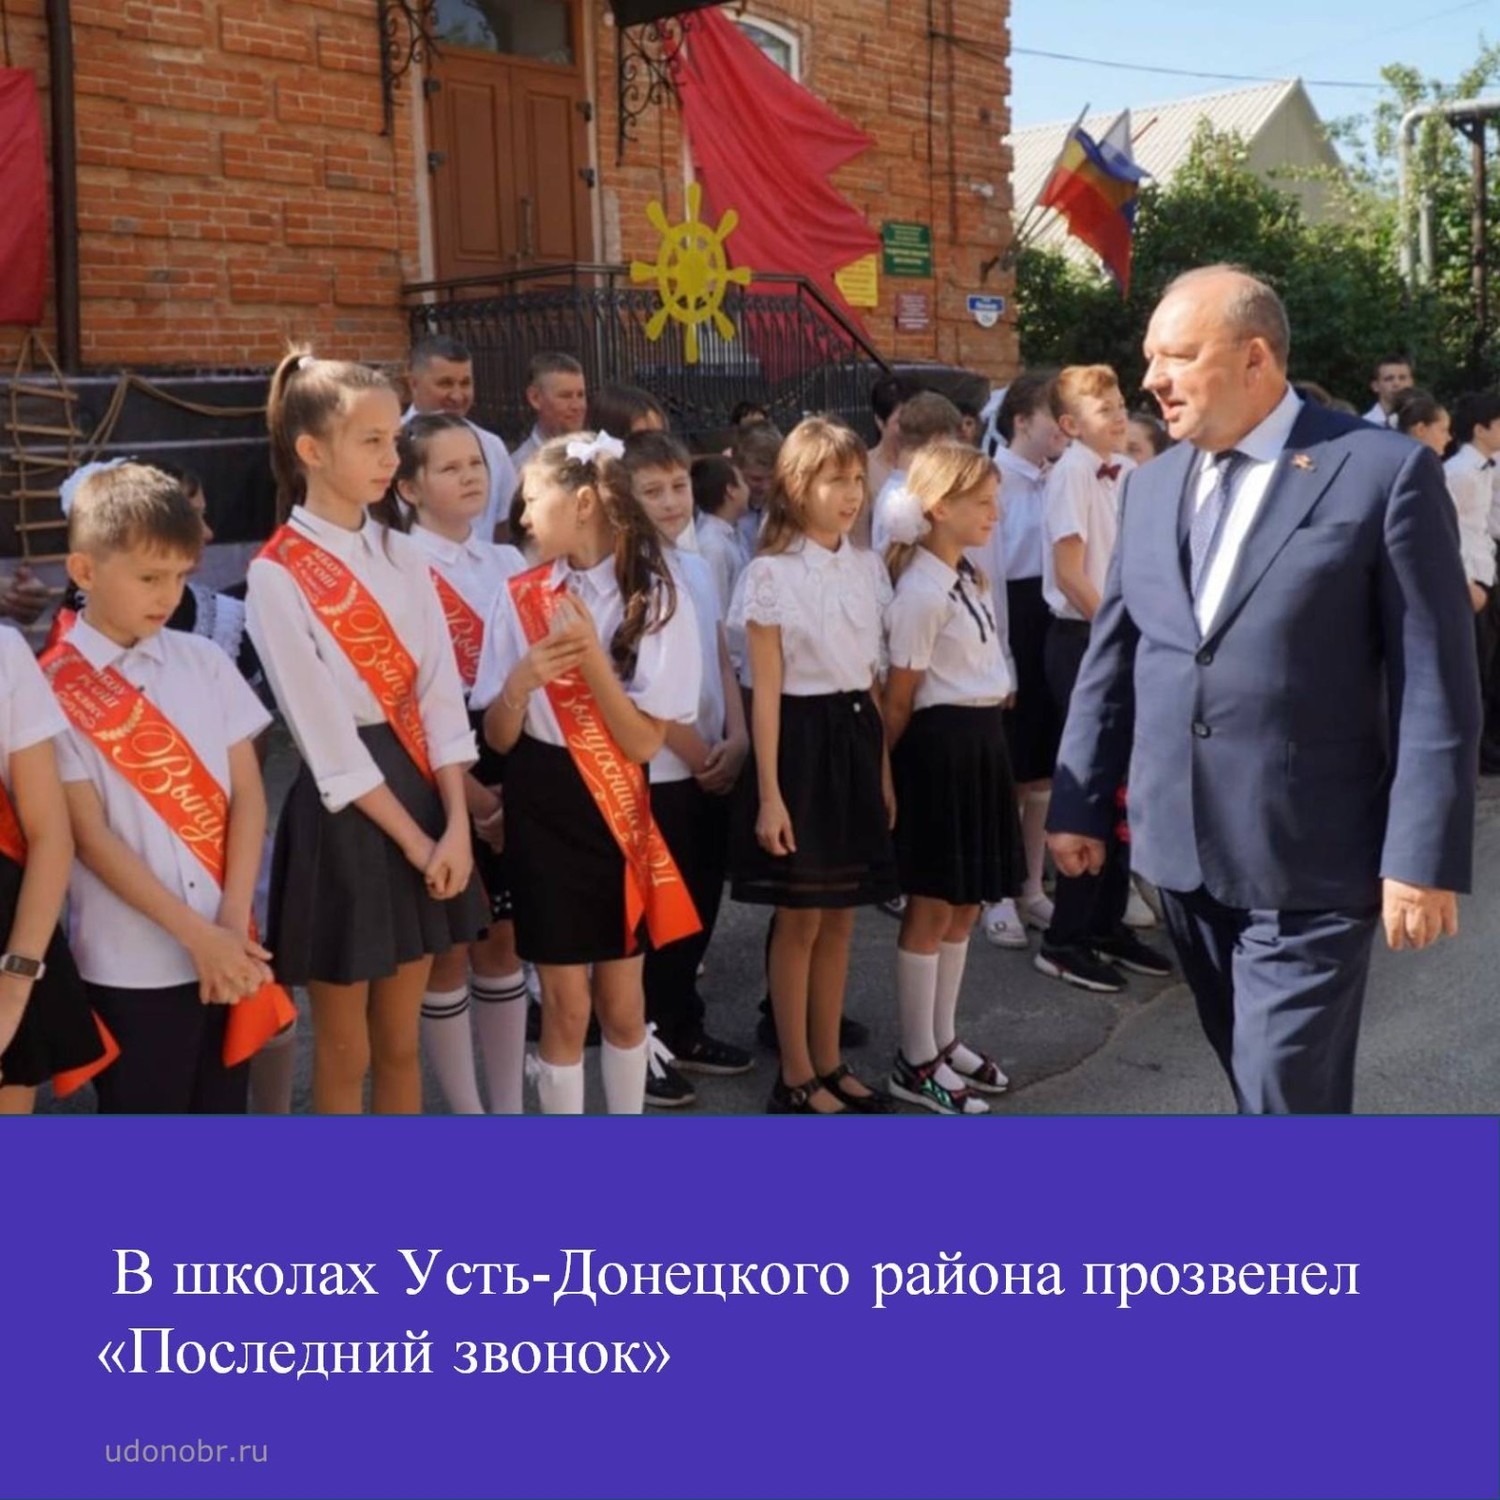 В школах Усть-Донецкого района прозвенел «Последний звонок»